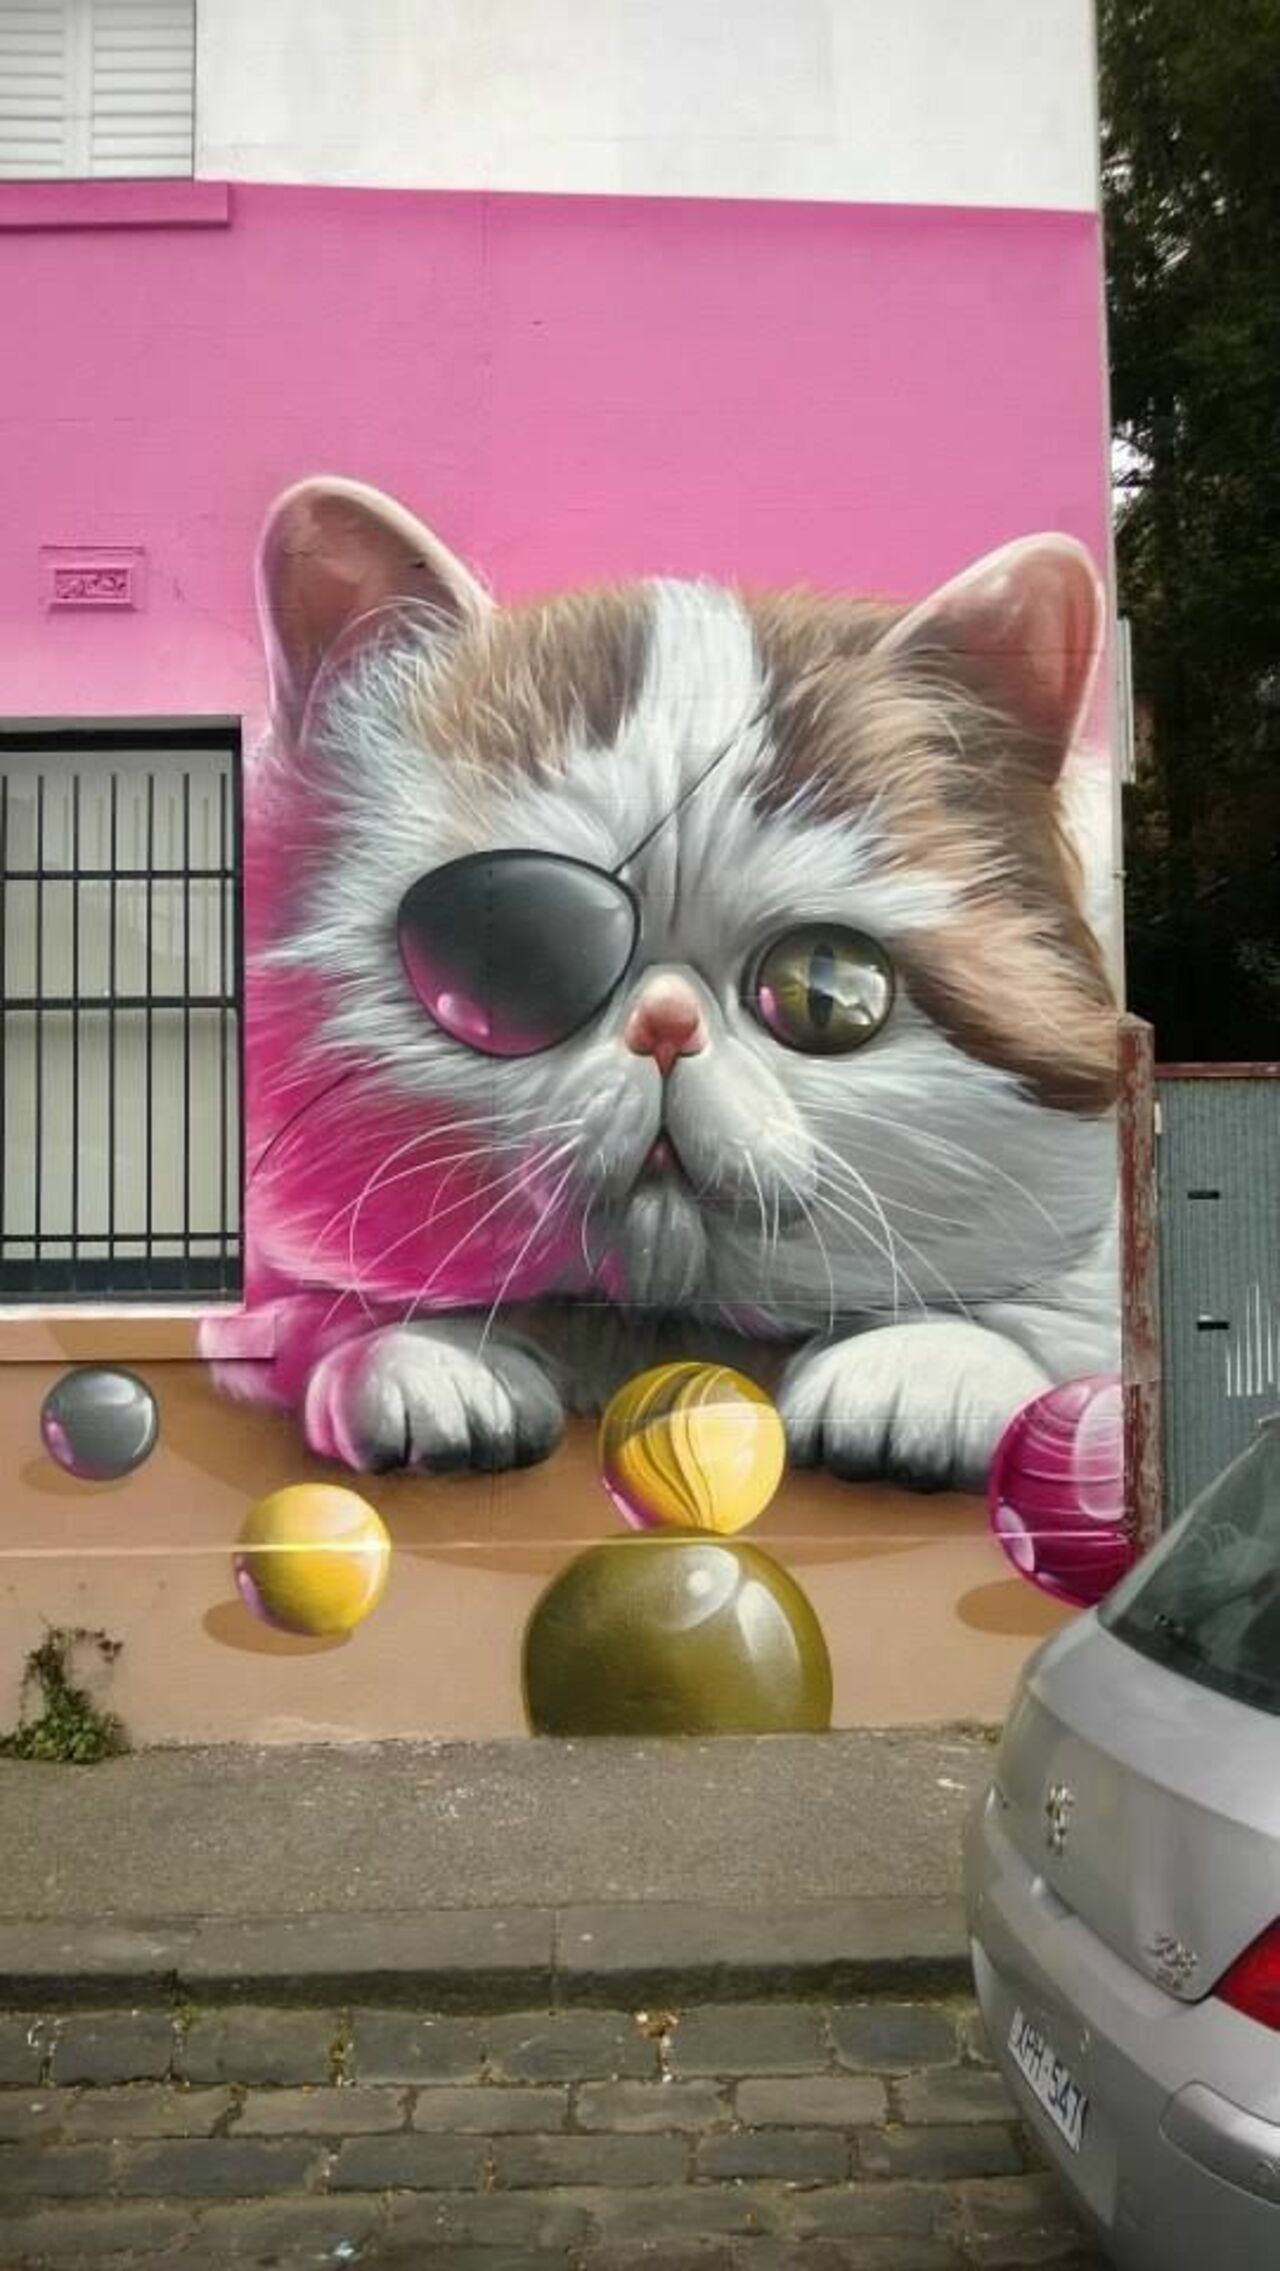 Street art in Melbourne Australia